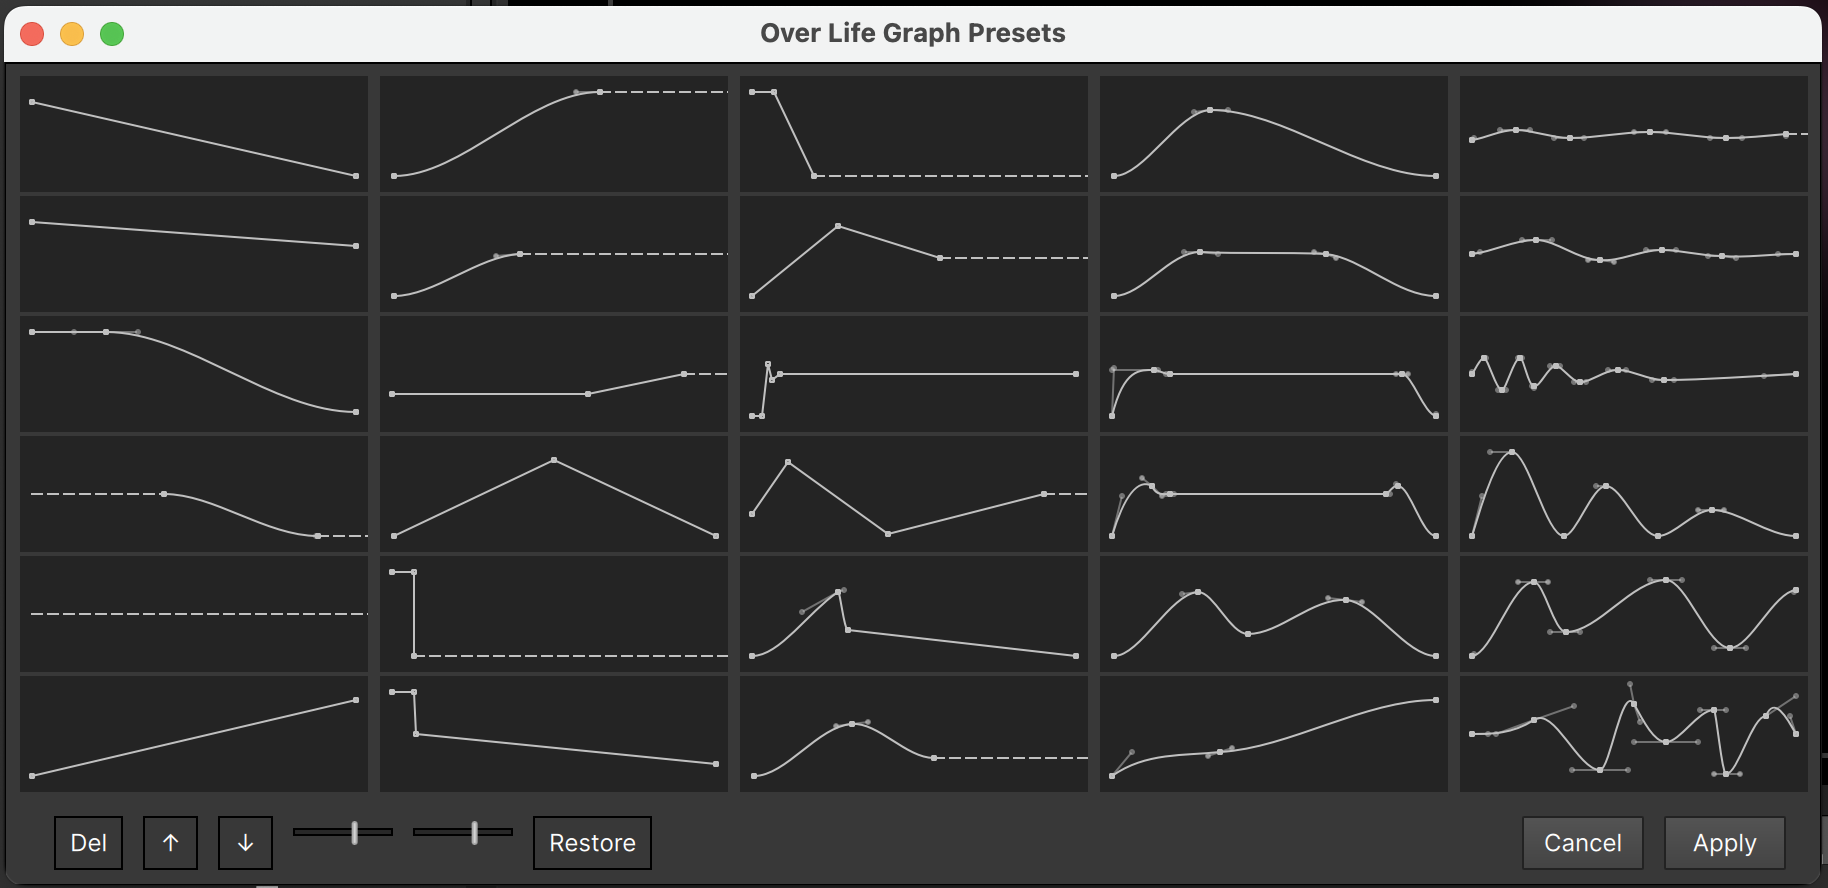 Over life graph preset dialog